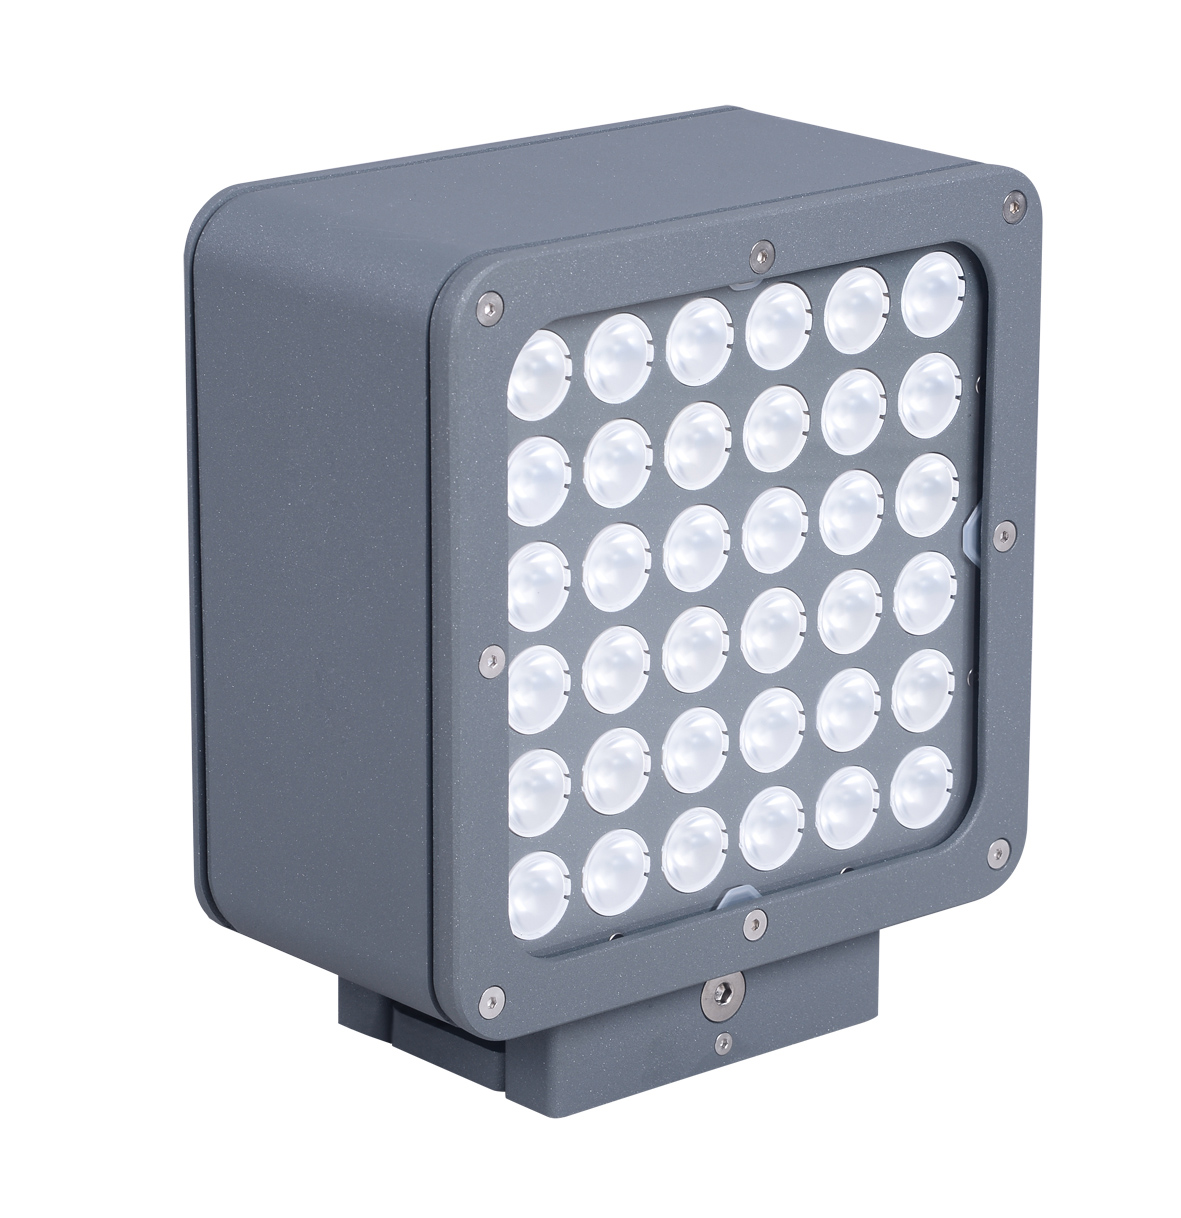 思域照明 SY-TGD-36W 36瓦 LED投光灯